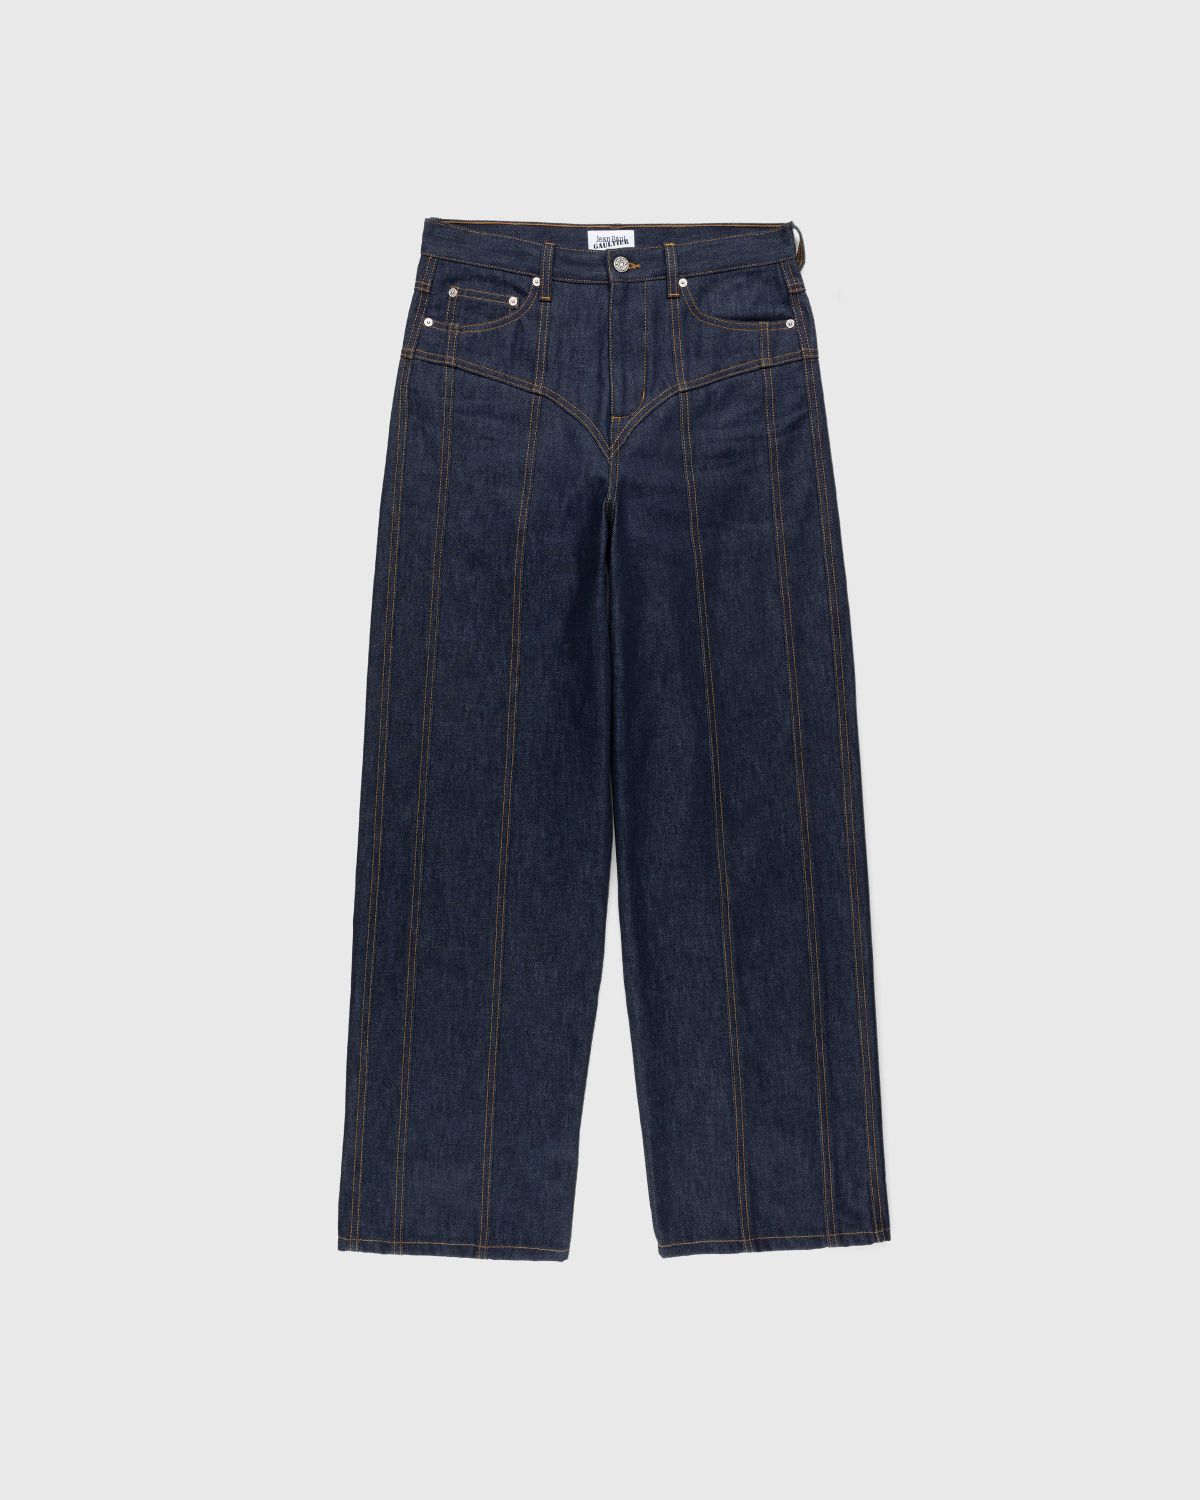 Jean Paul Gaultier – Raw Low-Rise Jeans Indigo - Denim - Blue - Image 1